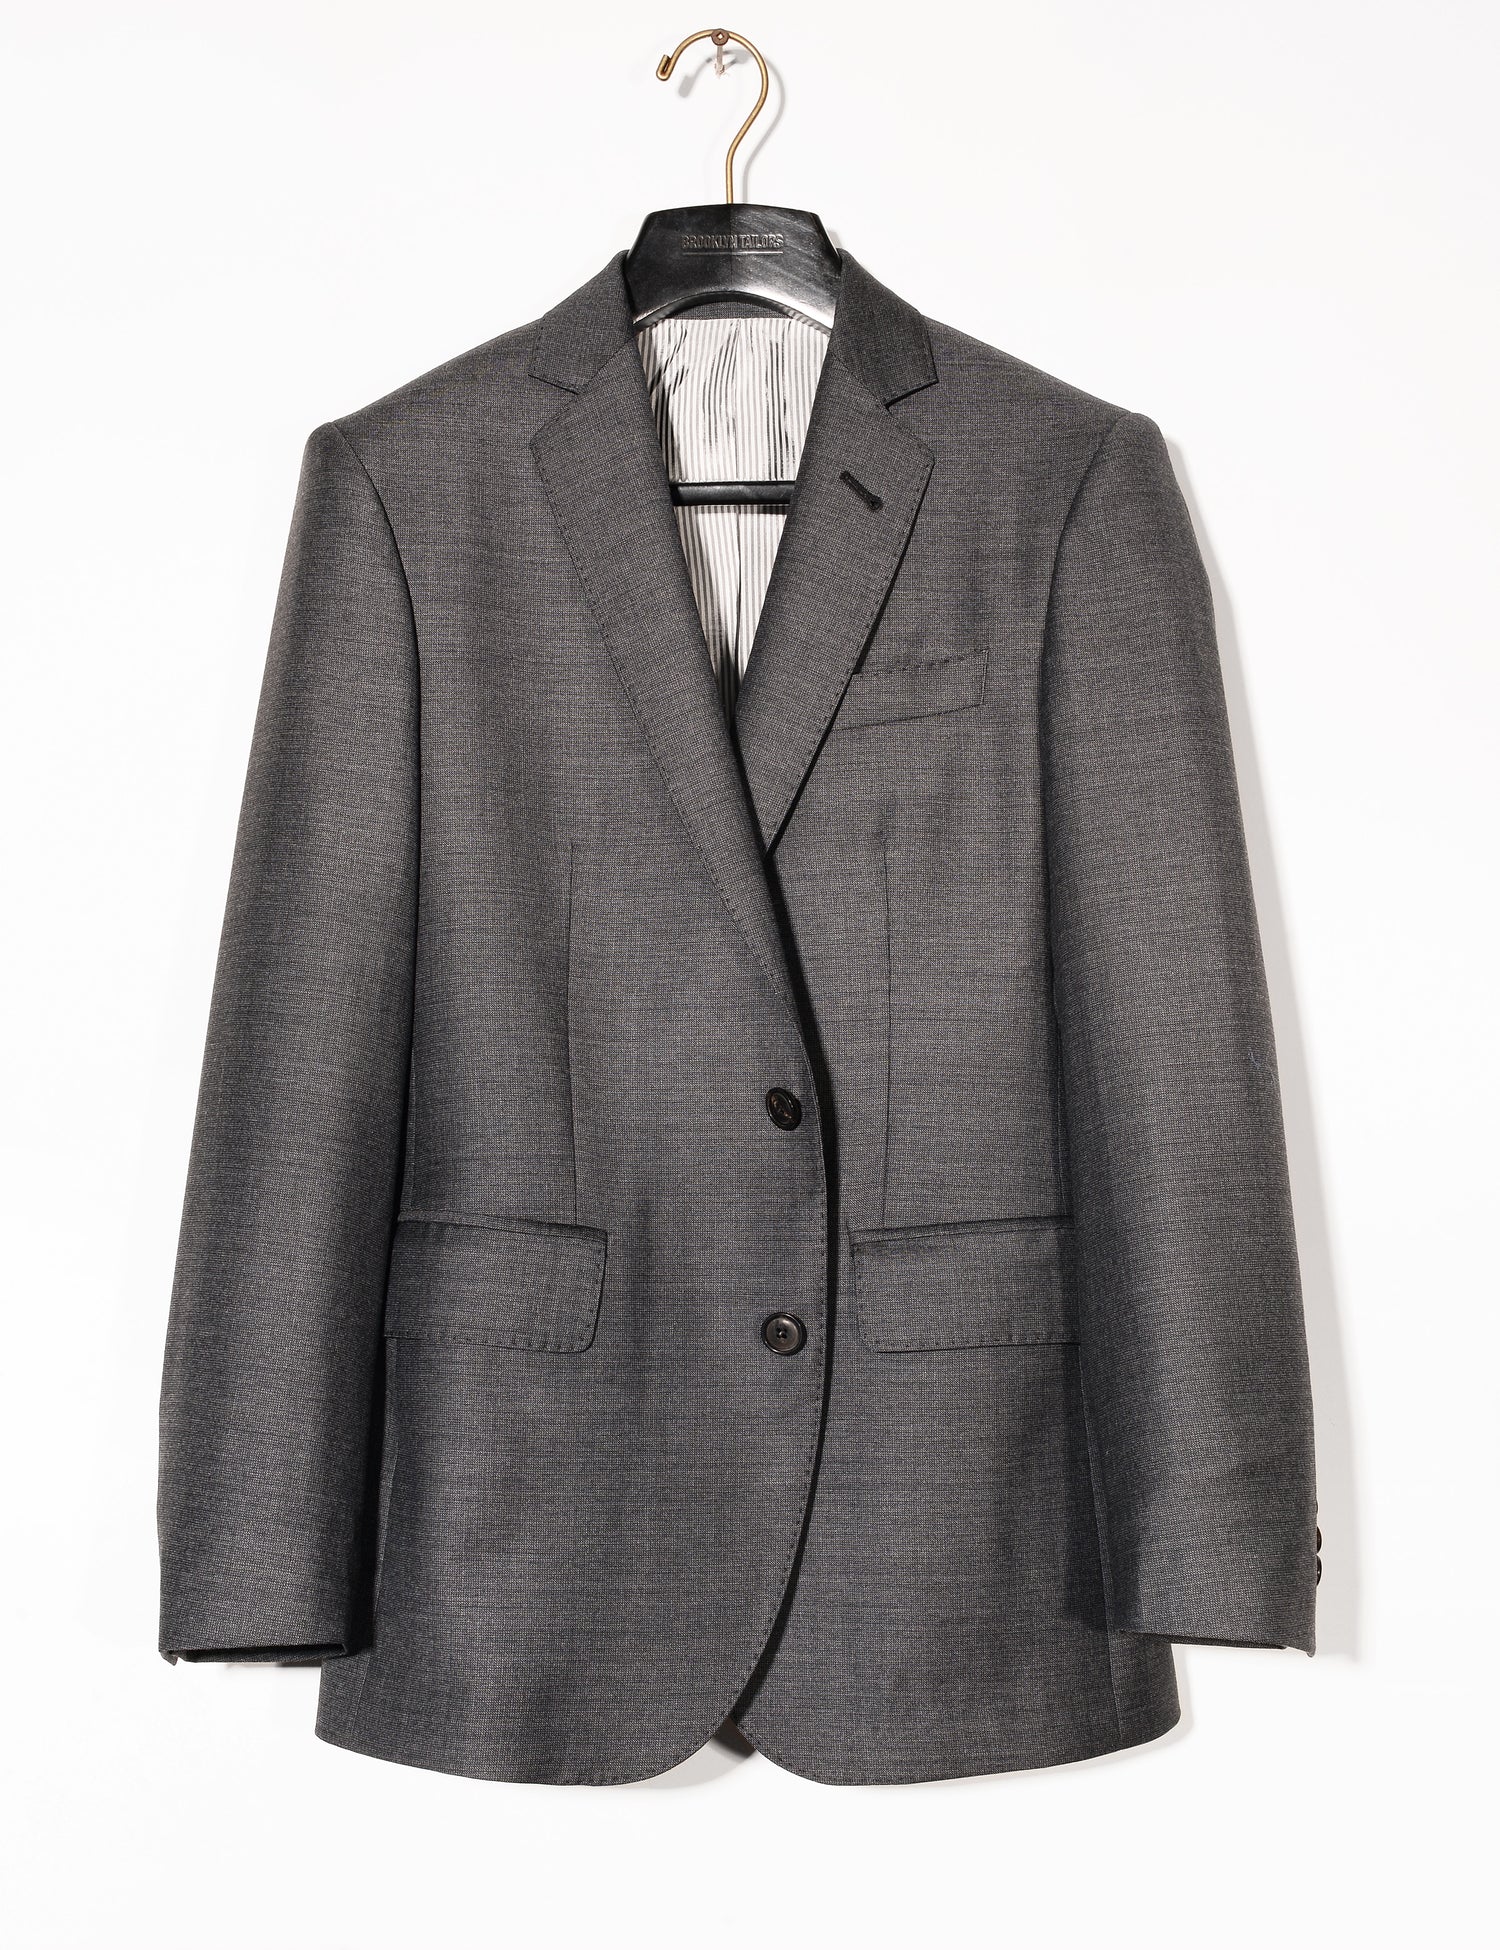 Brooklyn Tailors BKT50 Tailored Jacket in Wool Tickweave - Deep Gray full length shot on hanger